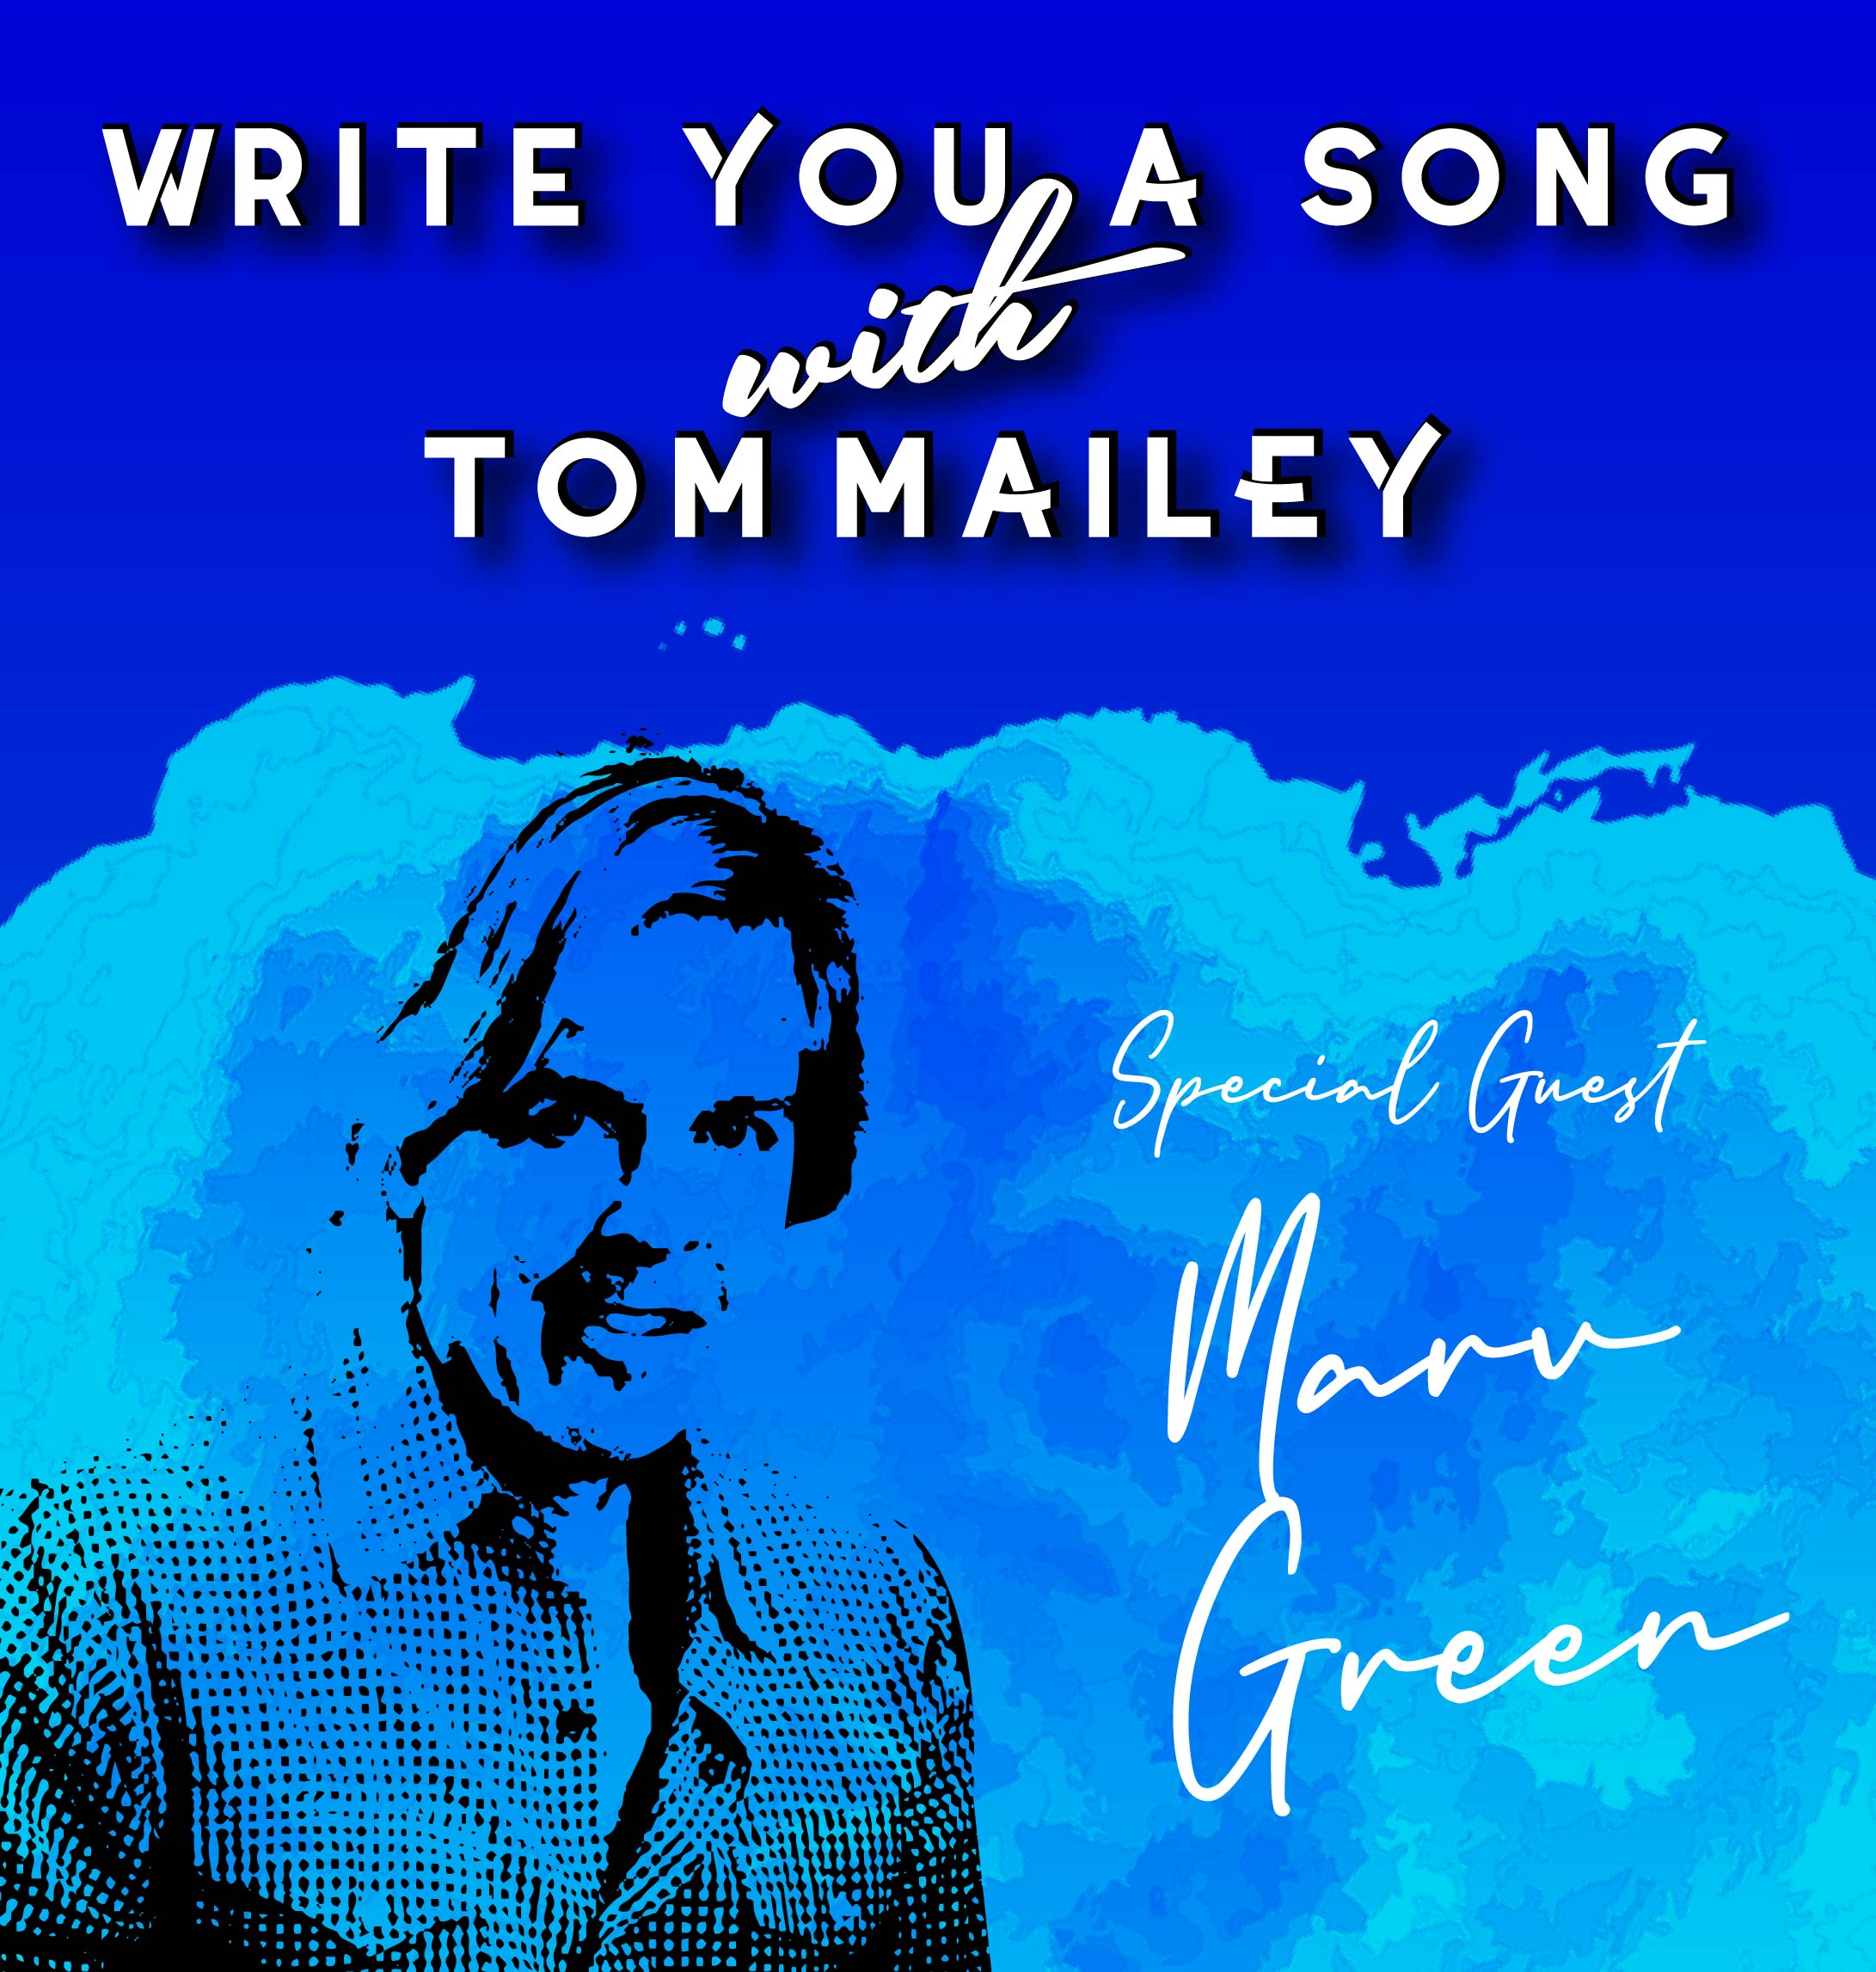 Marv Green: Words Inspire Melody